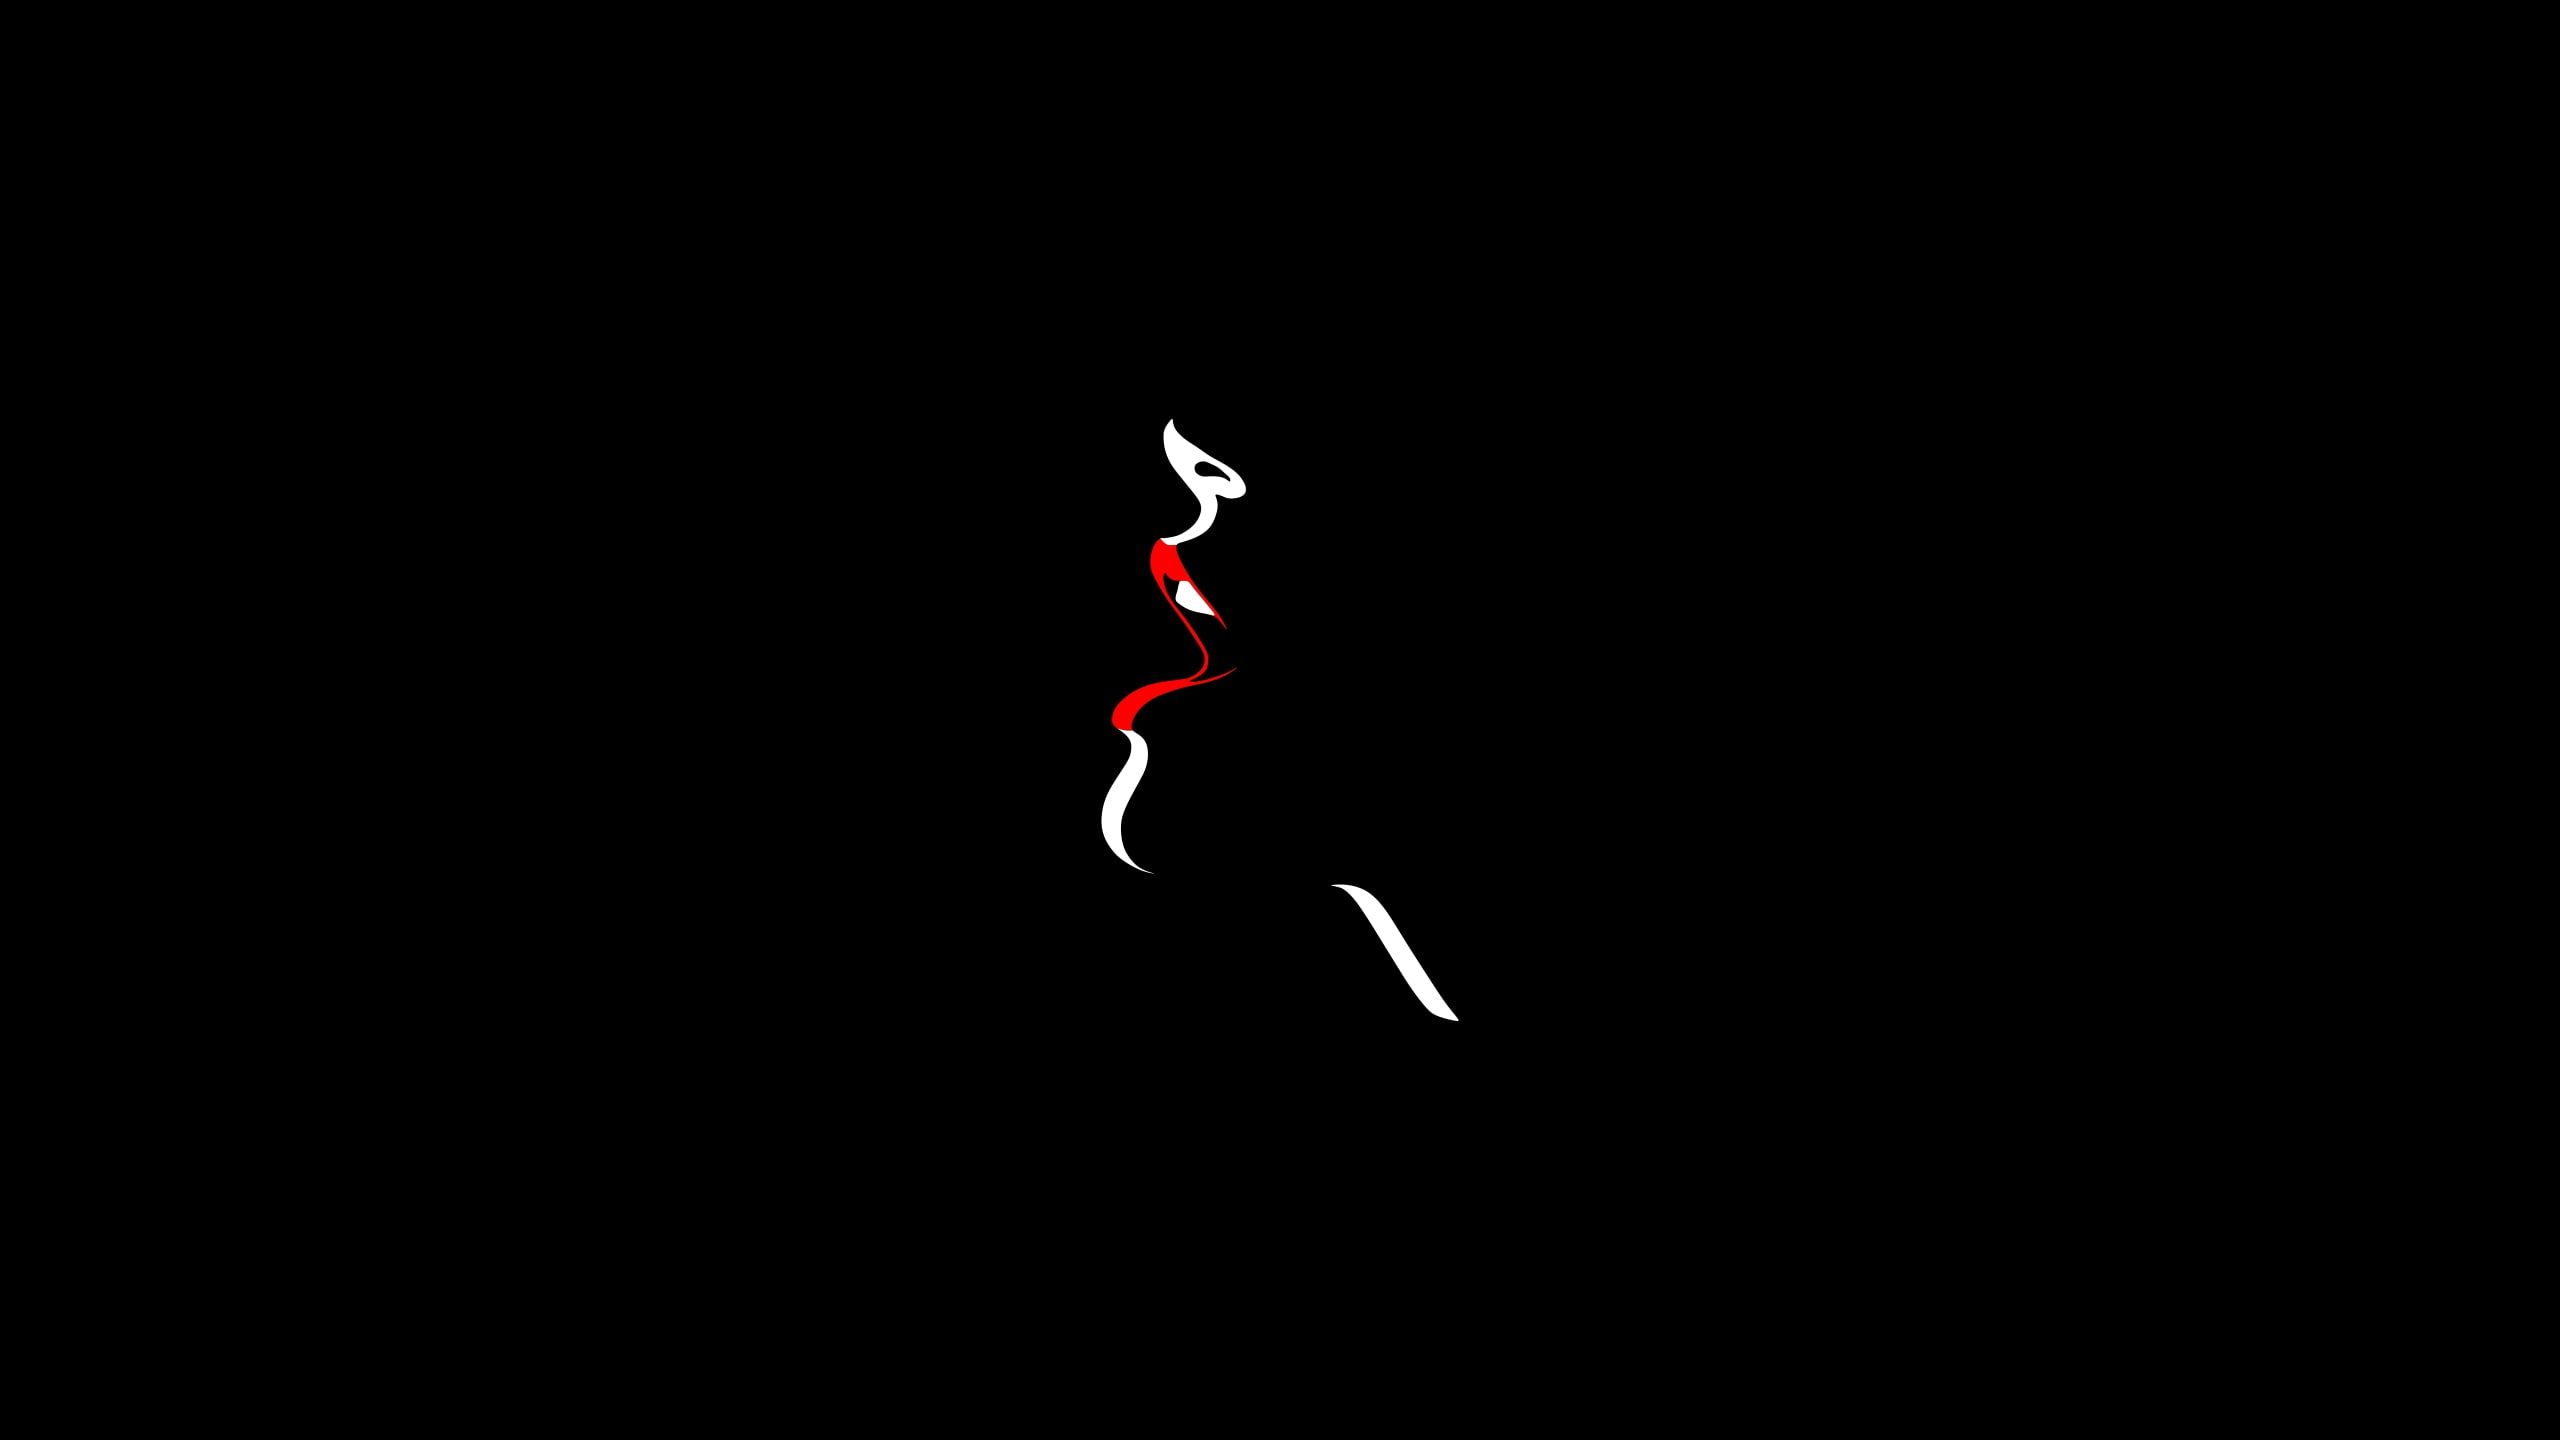 Malika Favre black background #mouth #open #minimalism #vector red lipstick K #wallpaper #hdwallpaper. Dark wallpaper, Black background, Portrait illustration